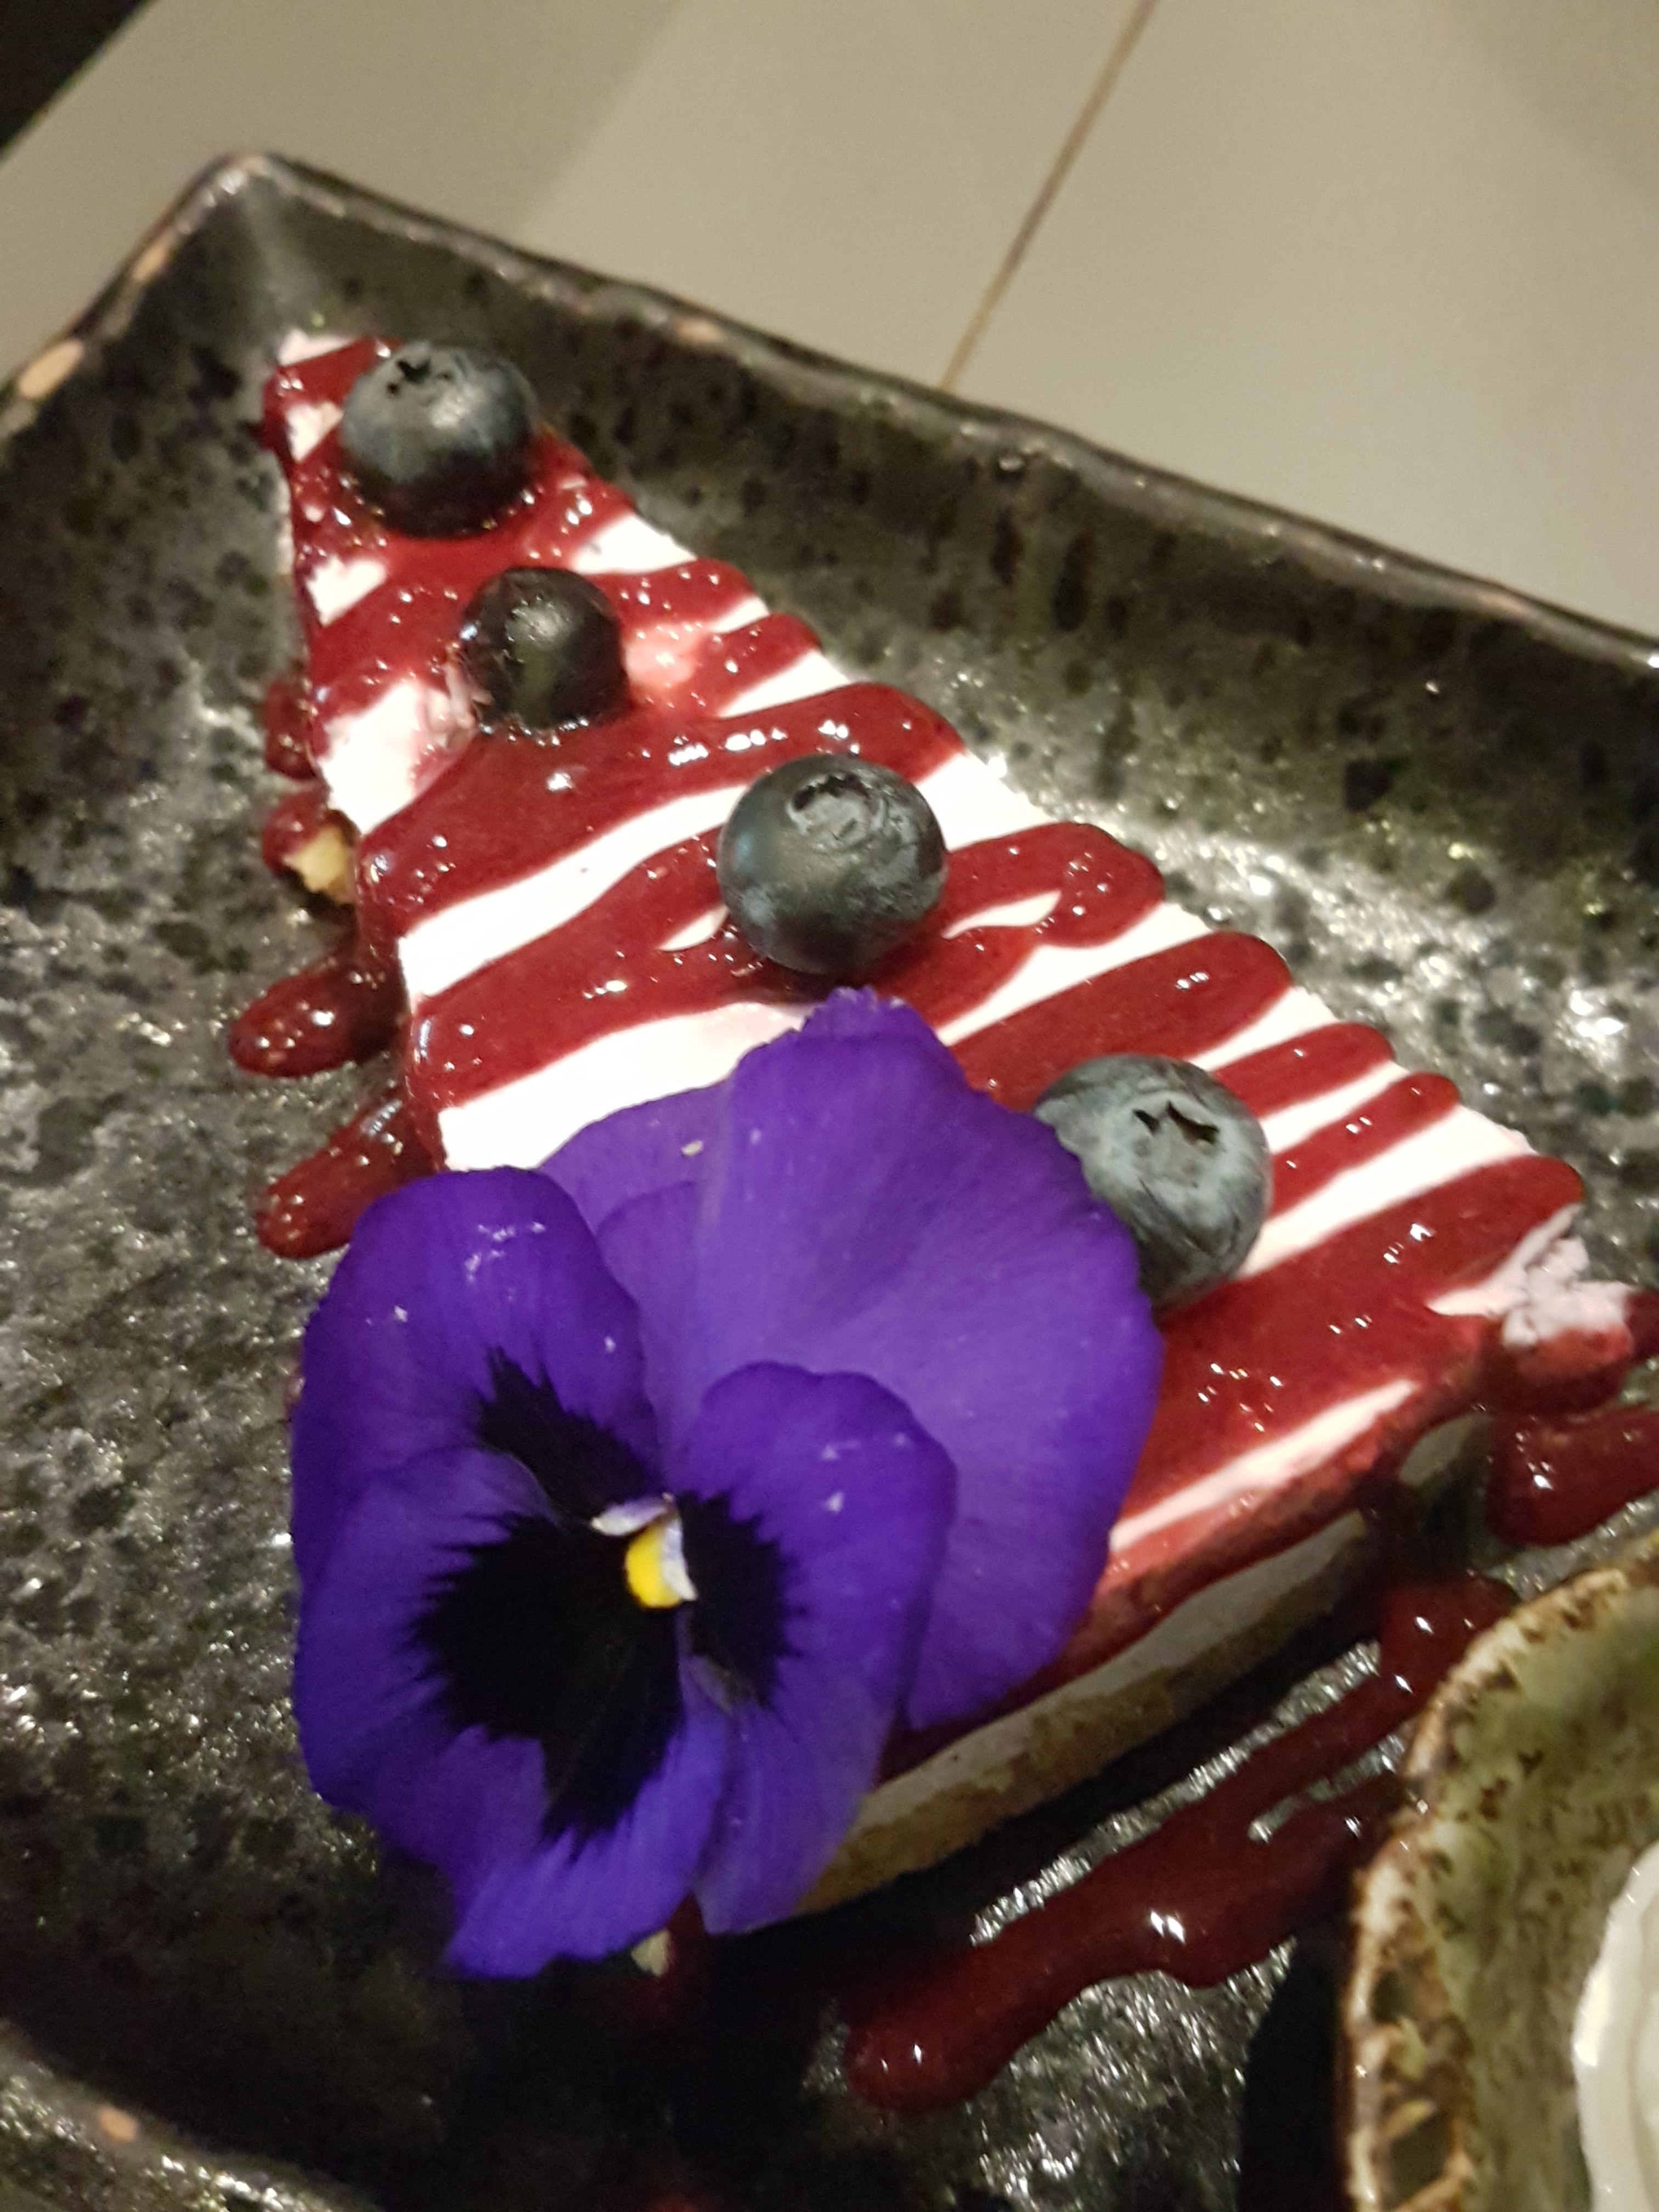 Blueberry cheesecake Skewd